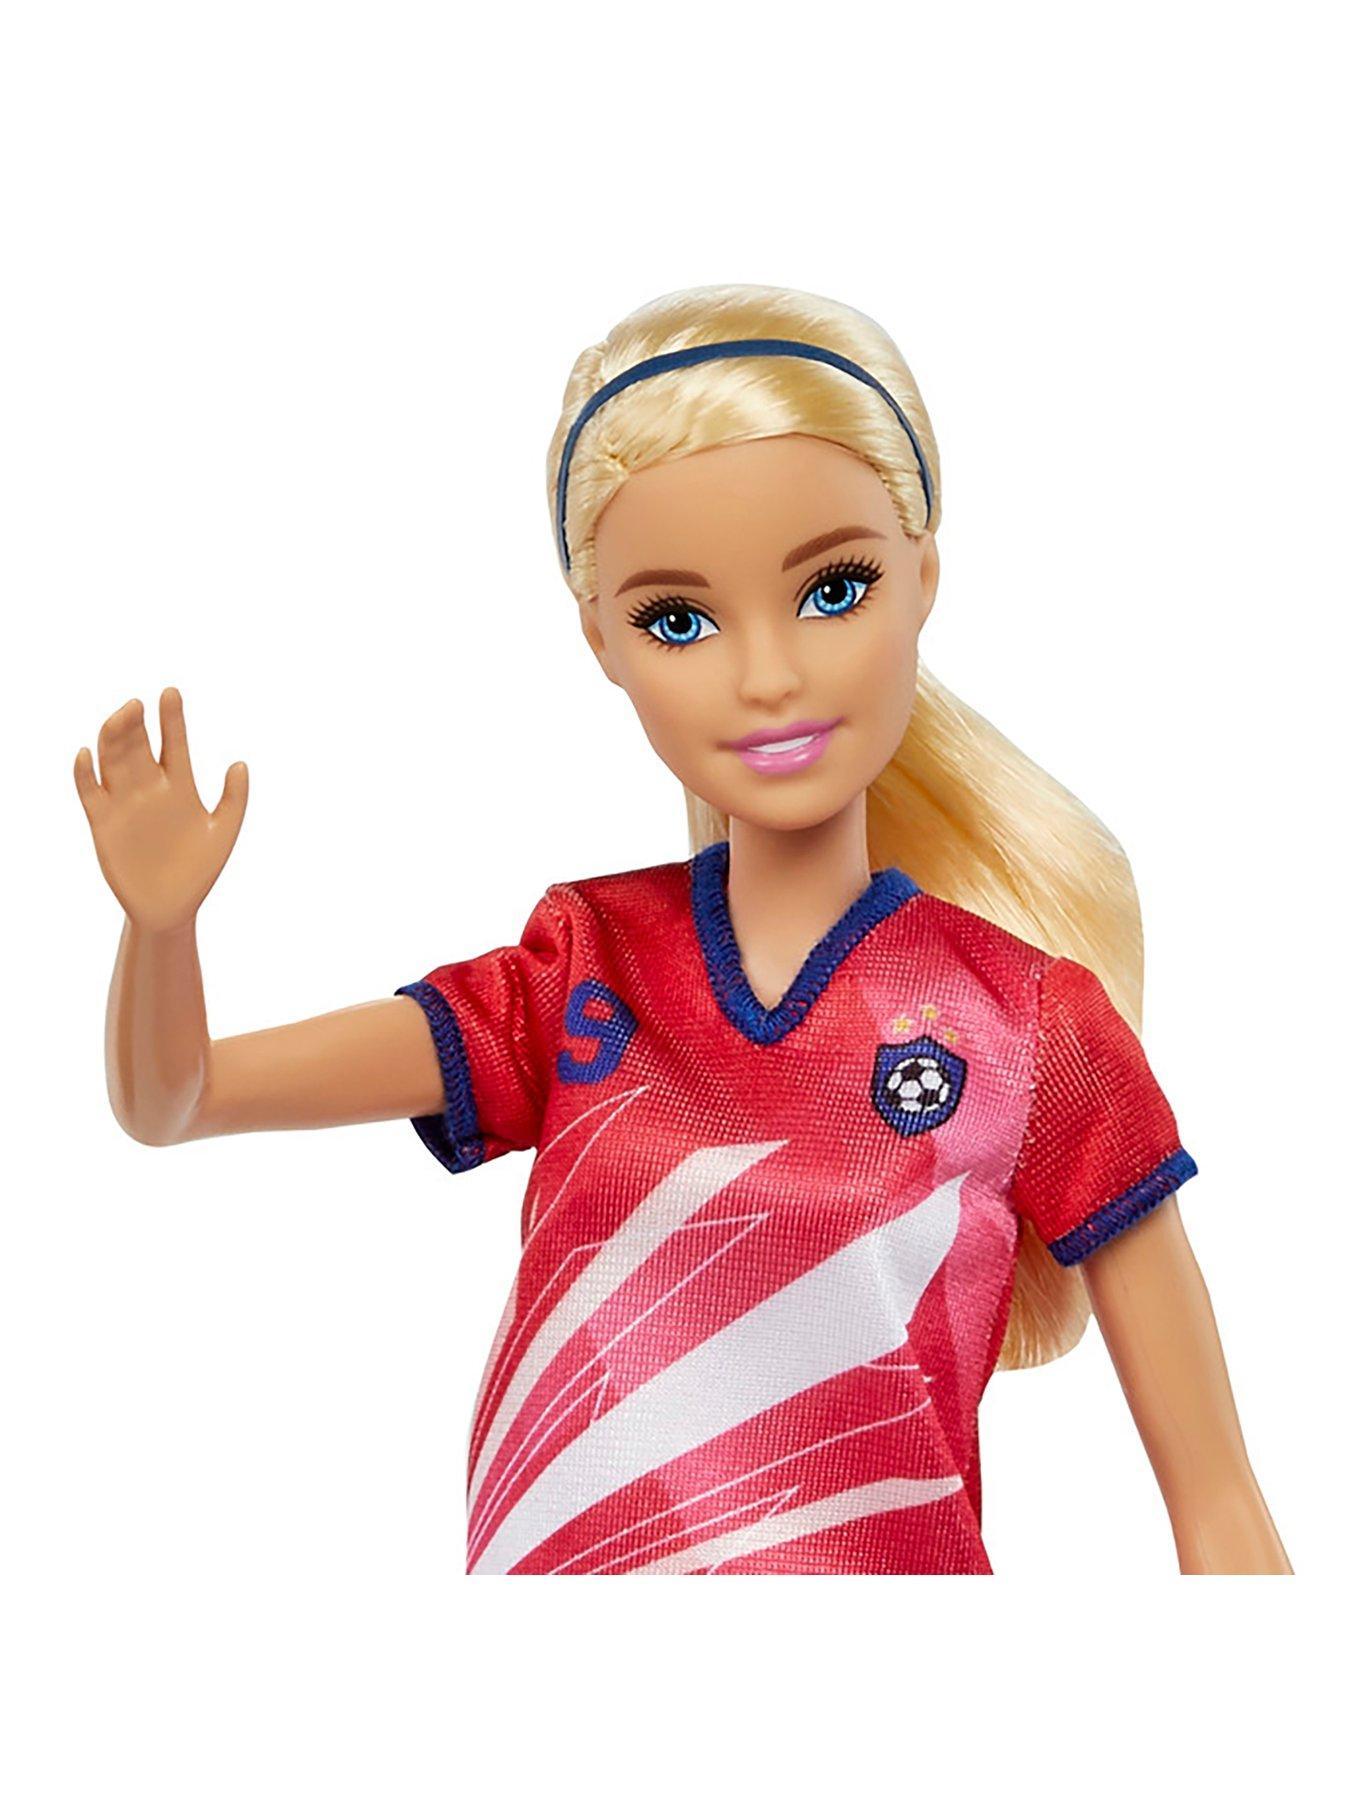 Barbie Careers Footballer Doll | littlewoods.com